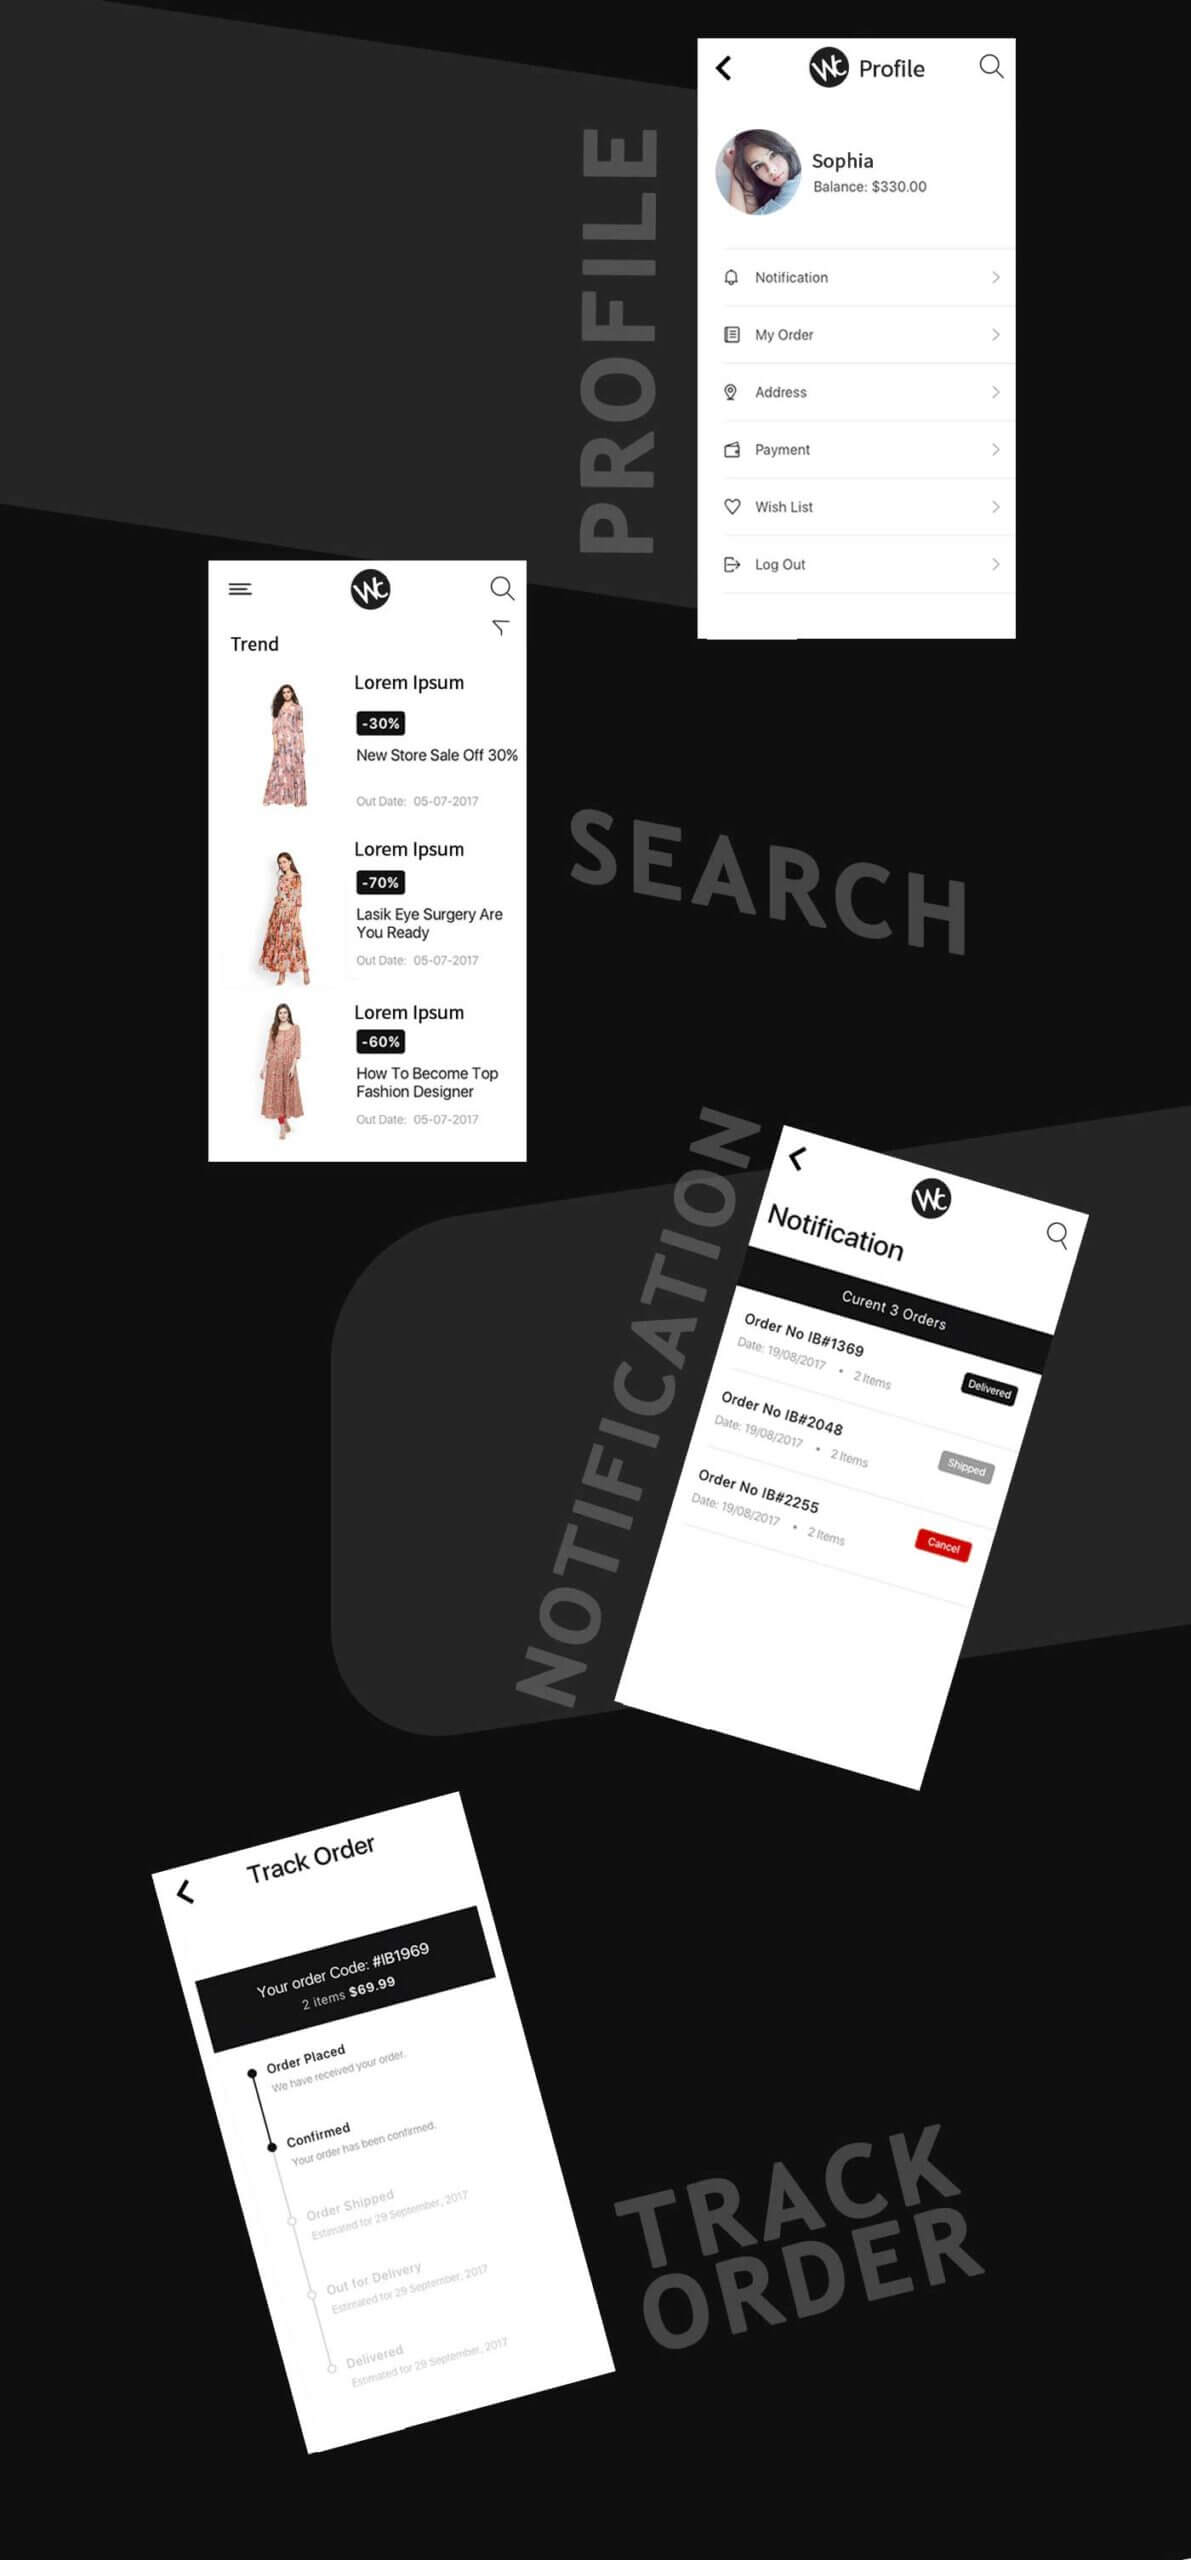 WomCloth app design_CaracalEye